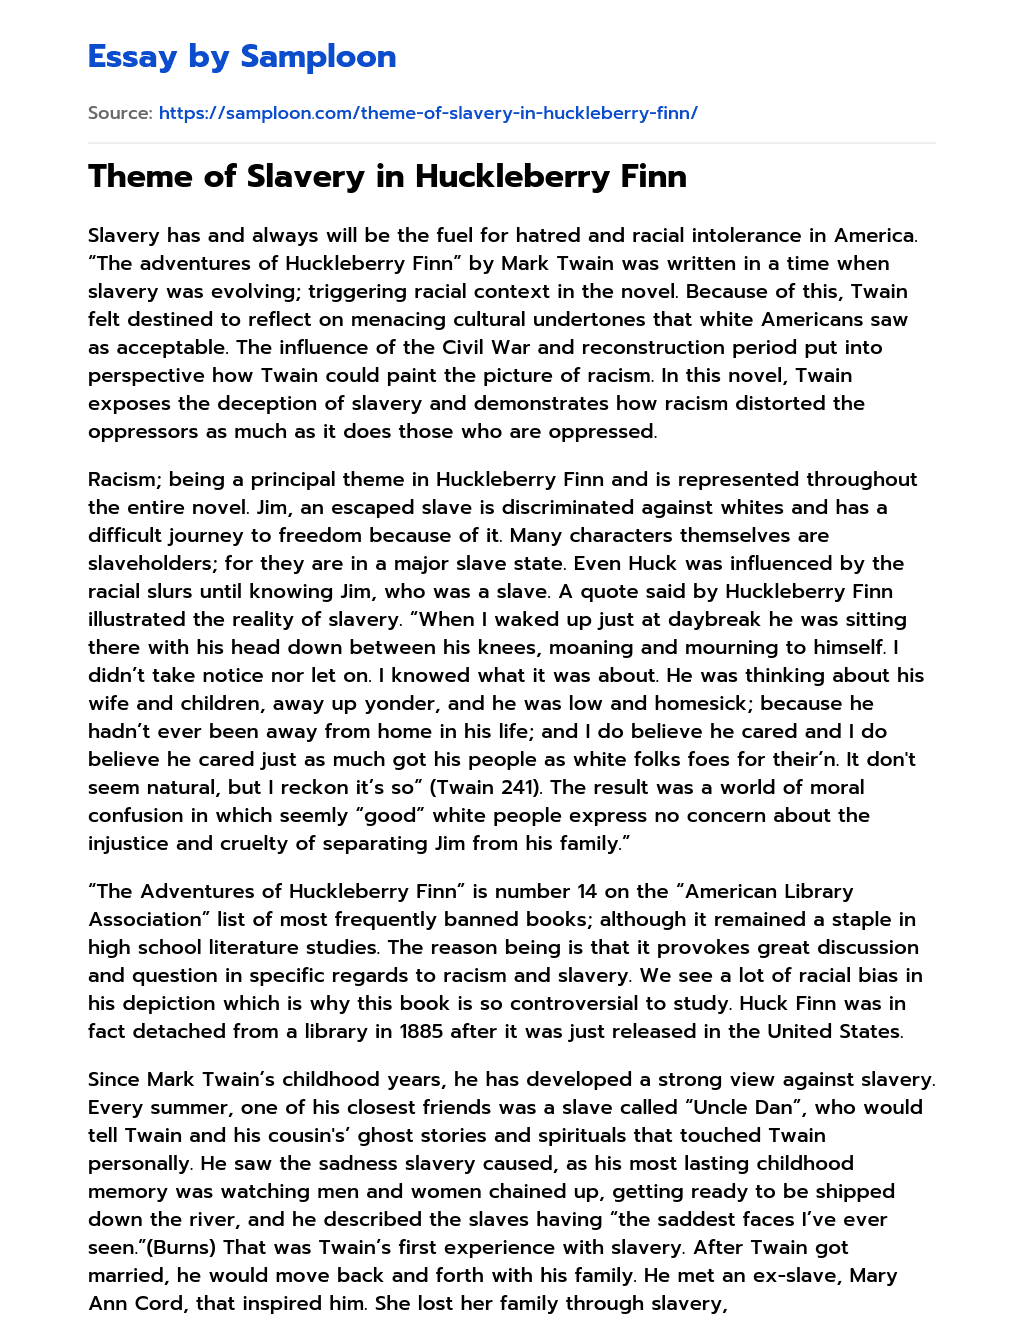 racism in huckleberry finn essay